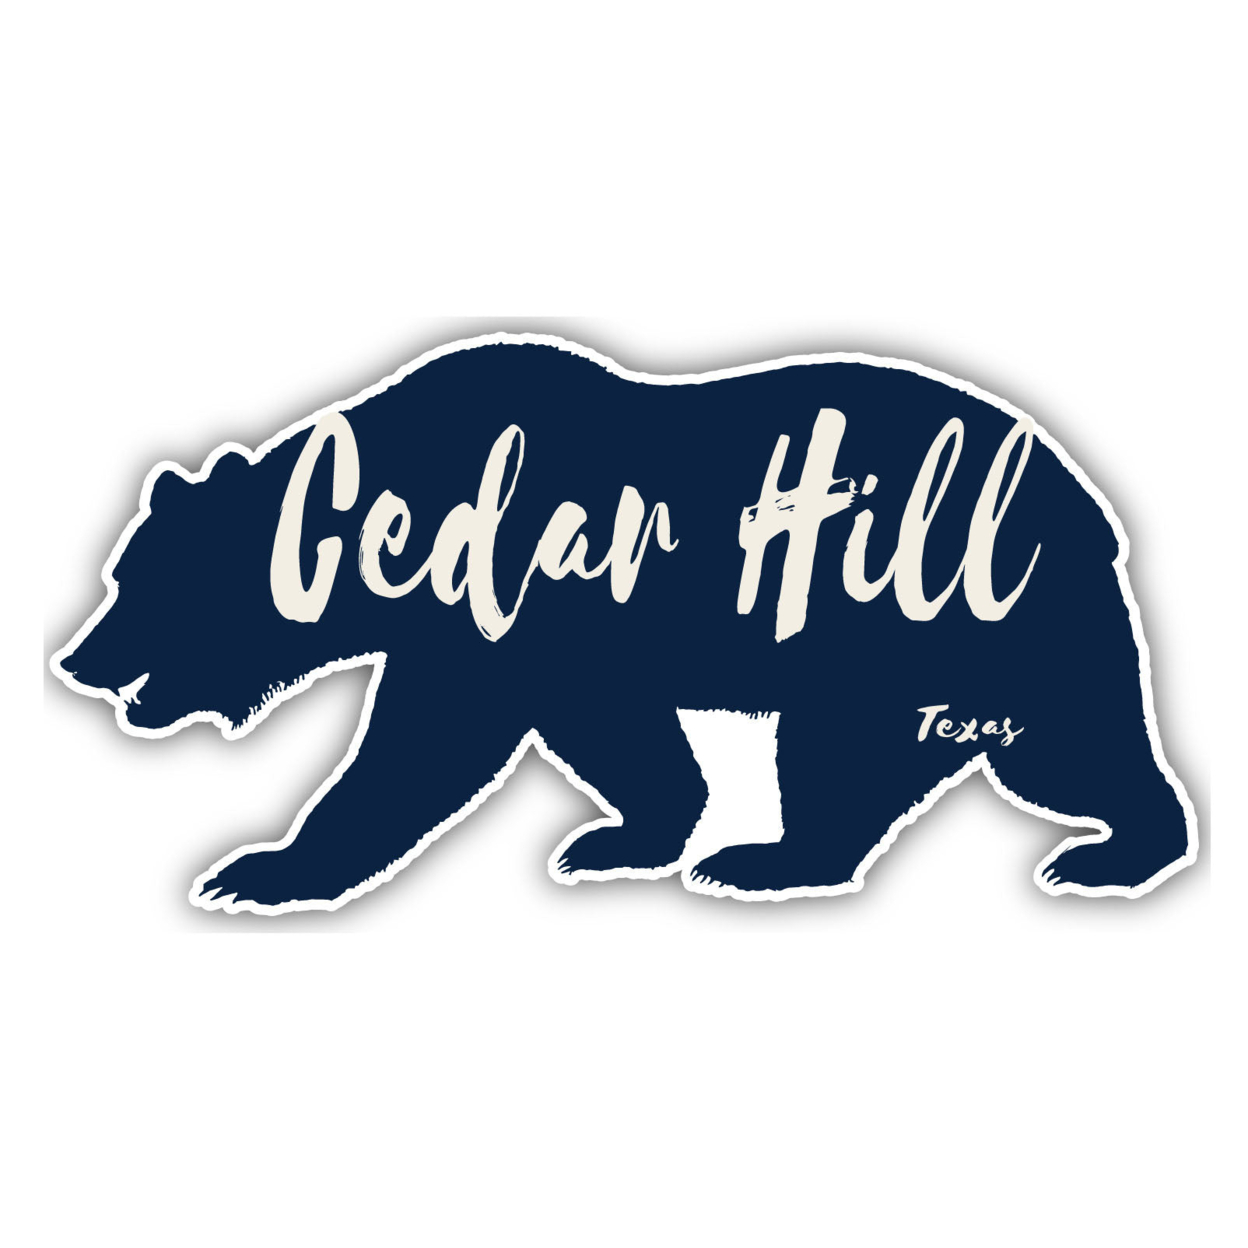 Cedar Hill Texas Souvenir Decorative Stickers (Choose Theme And Size) - 4-Pack, 8-Inch, Bear